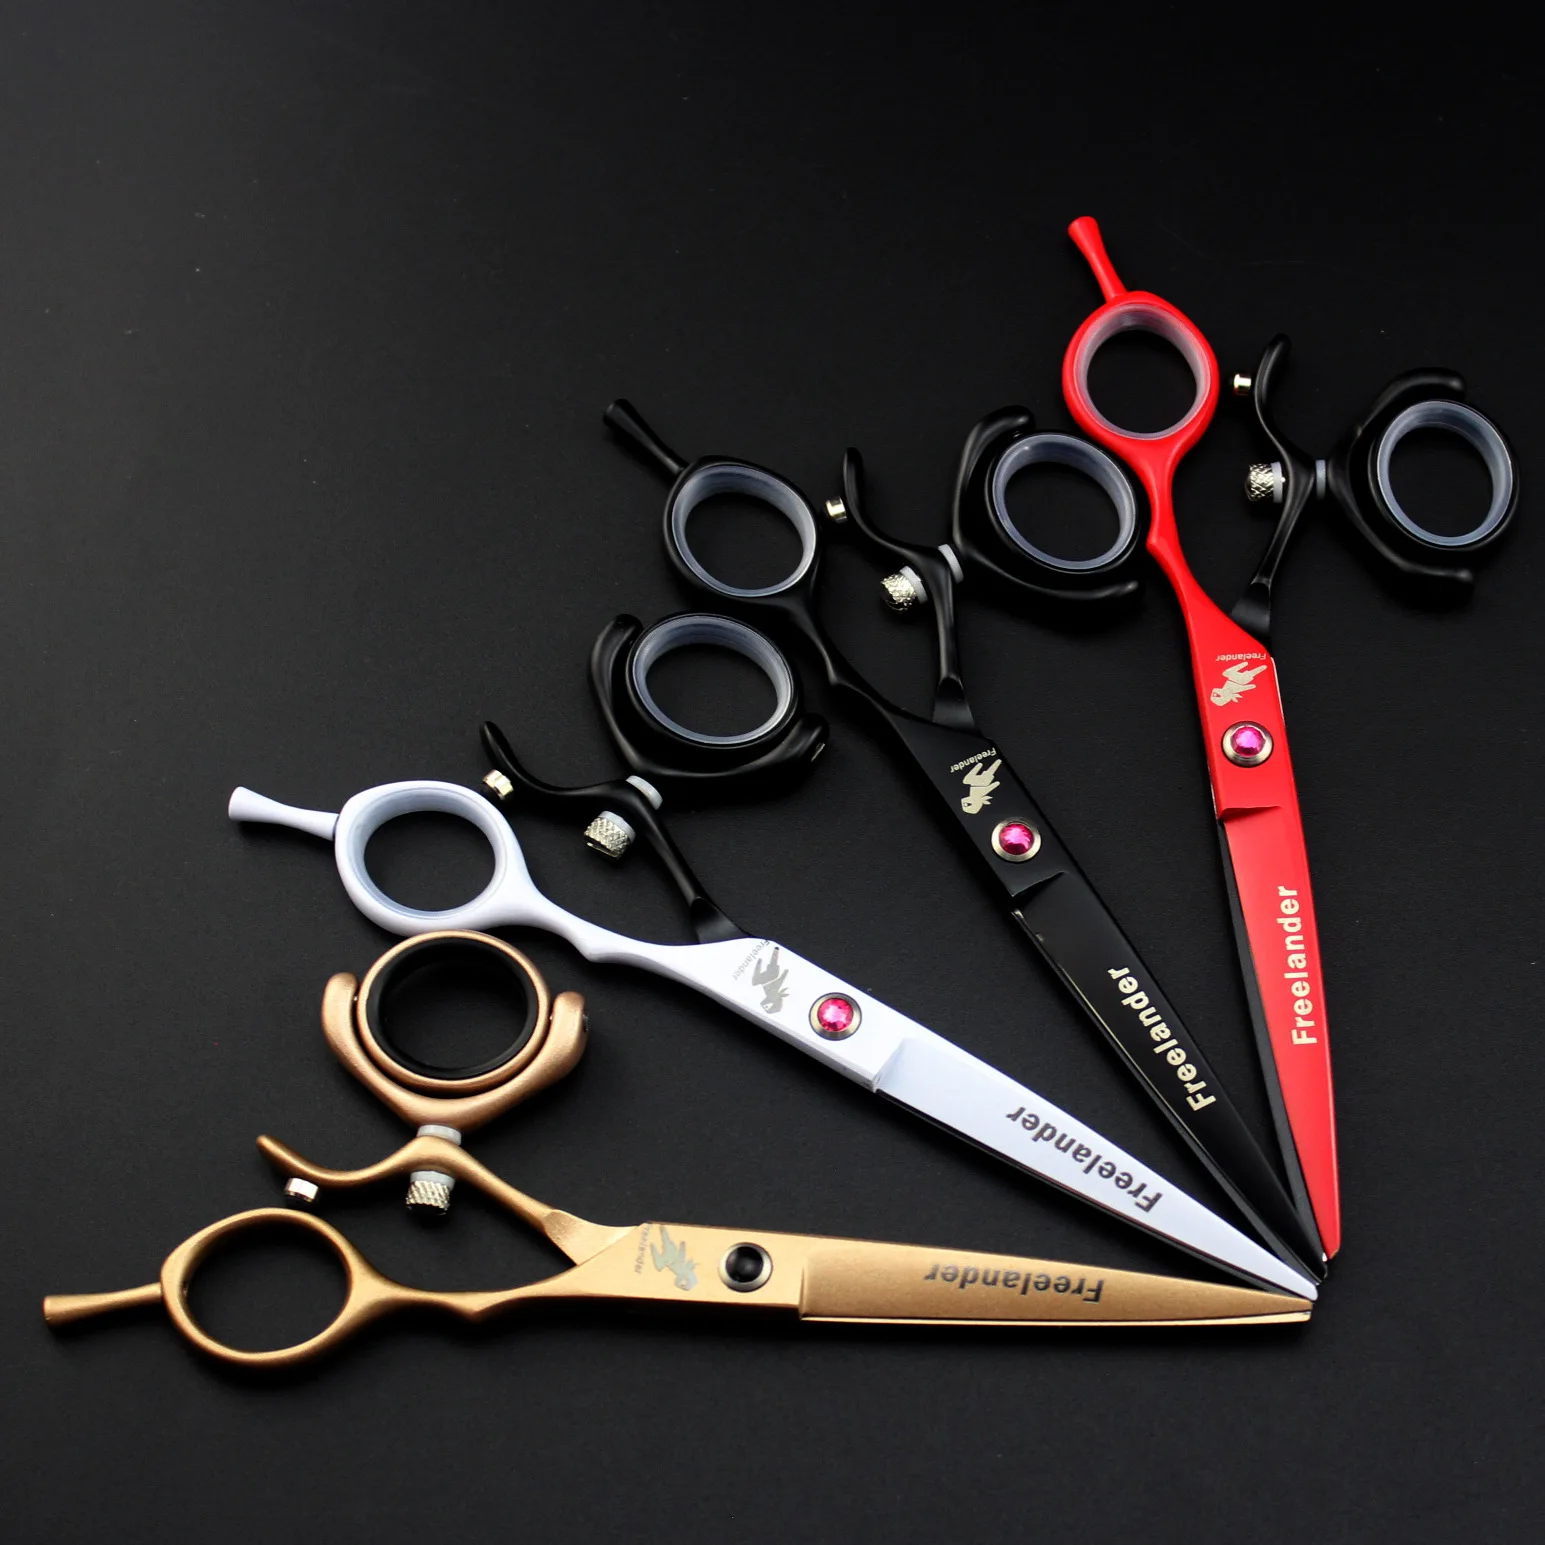 

6 Professional Hair Salon Structure Scissors Set Cutting Barber Haircut Thinning Shear Scissors Swivel Thumb Cutting Shears